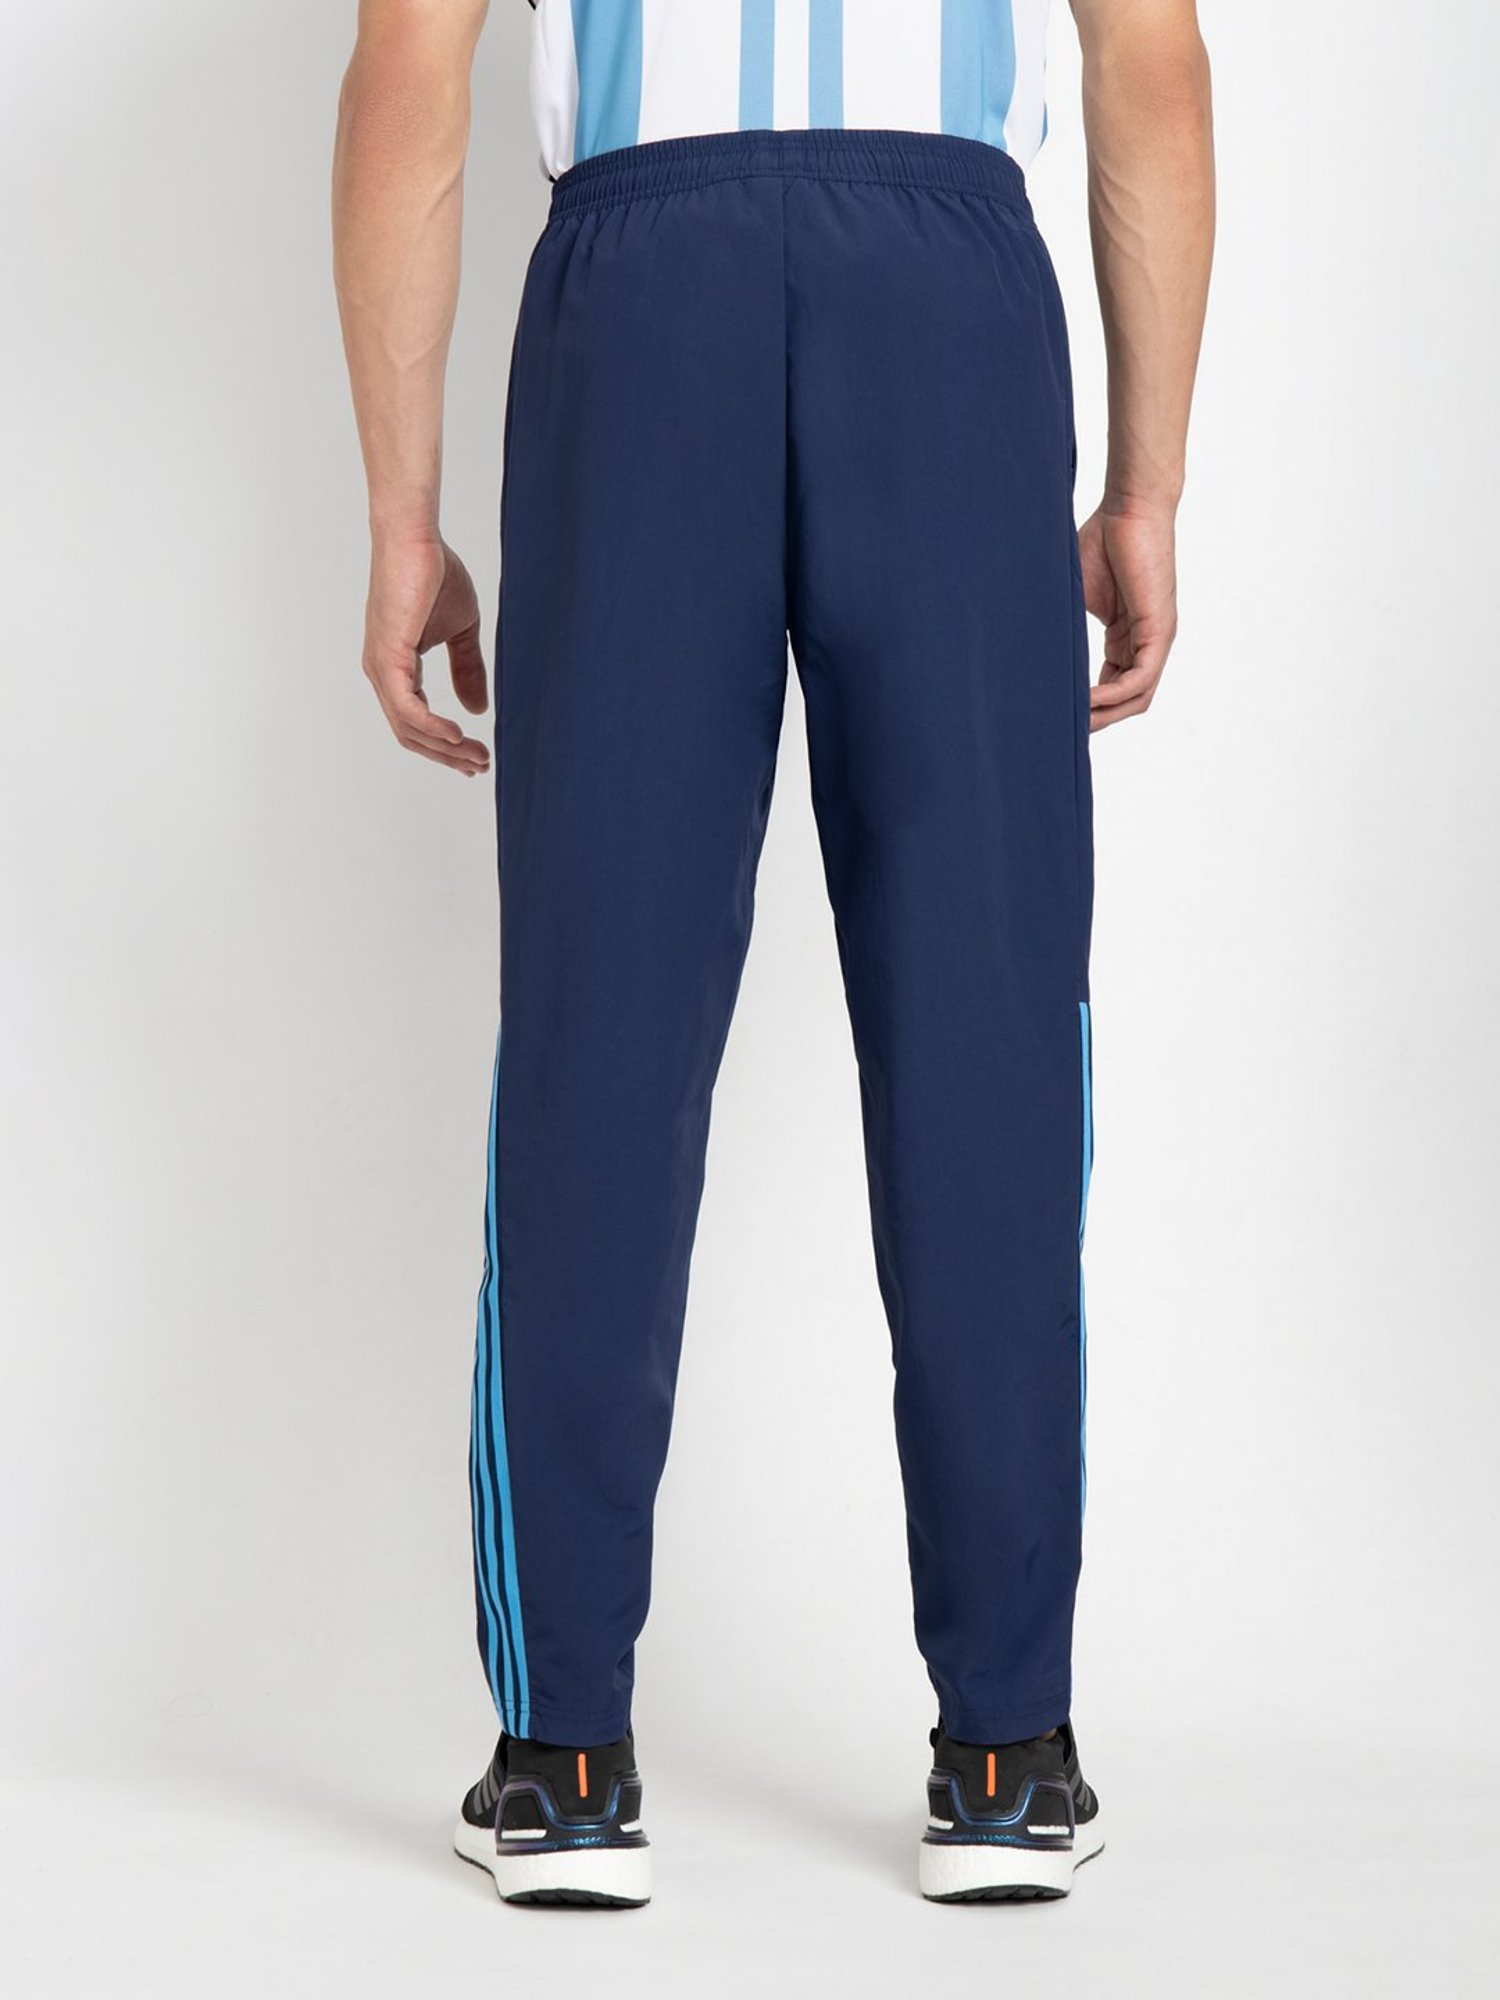 Men's Adidas Tiro Track Pants - WHITE/BLUE/RED STRIPES - Civilized Nation -  Official Site